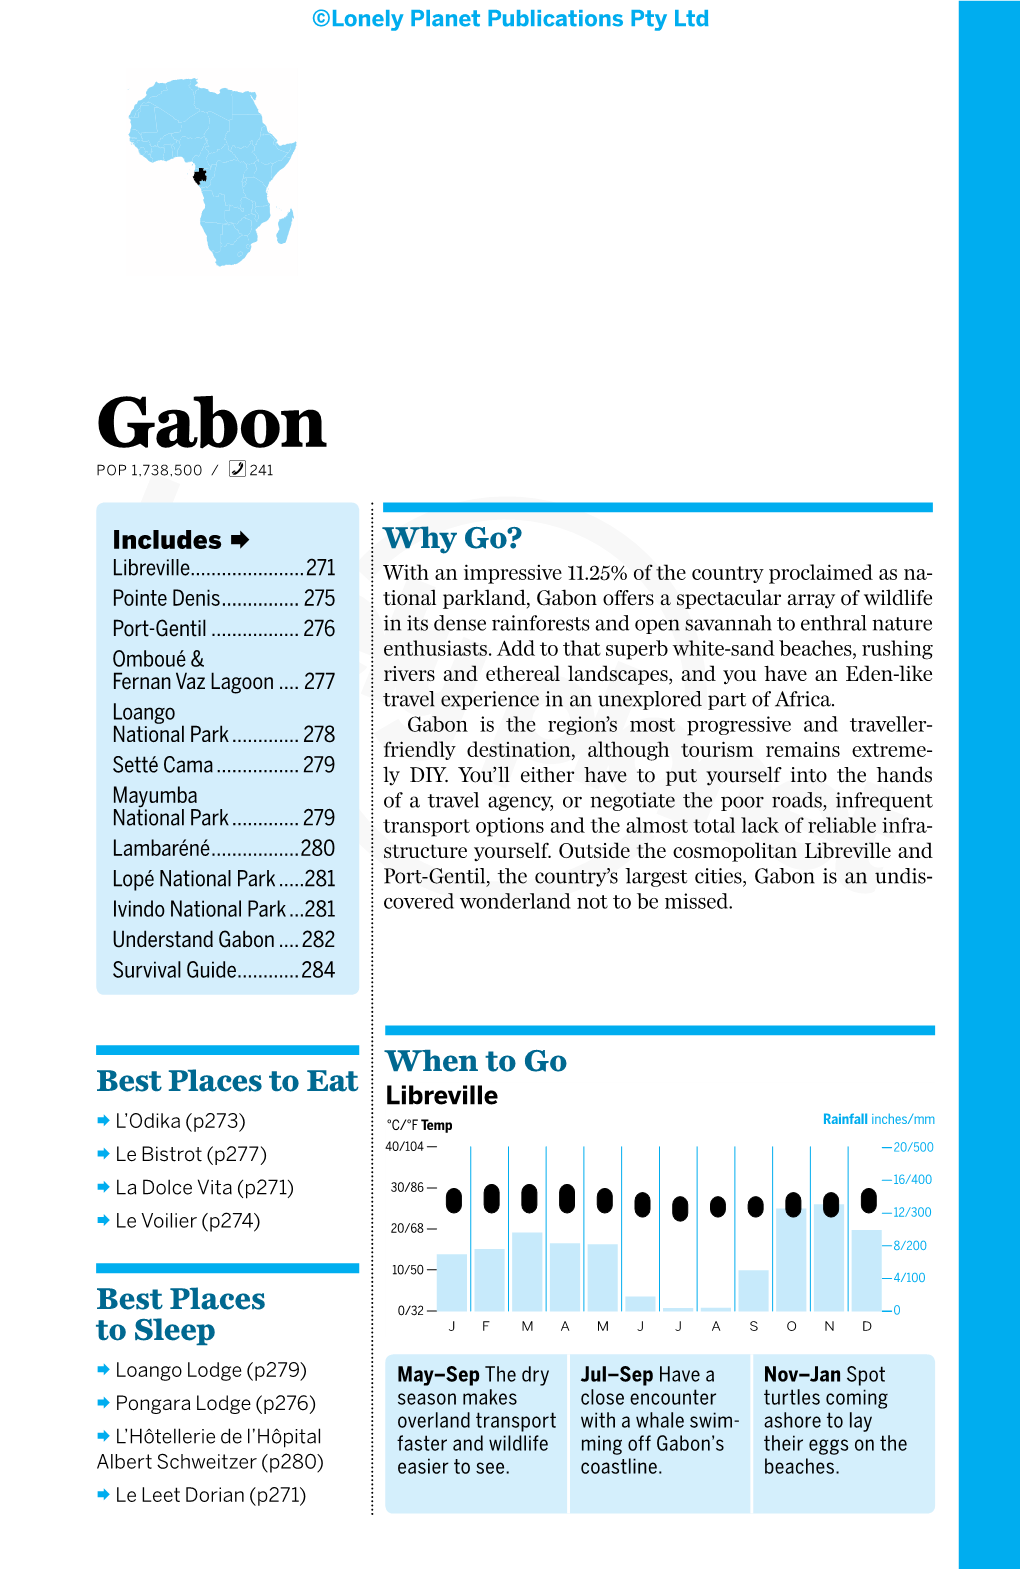 Gabon% POP 1,738,500 / 241